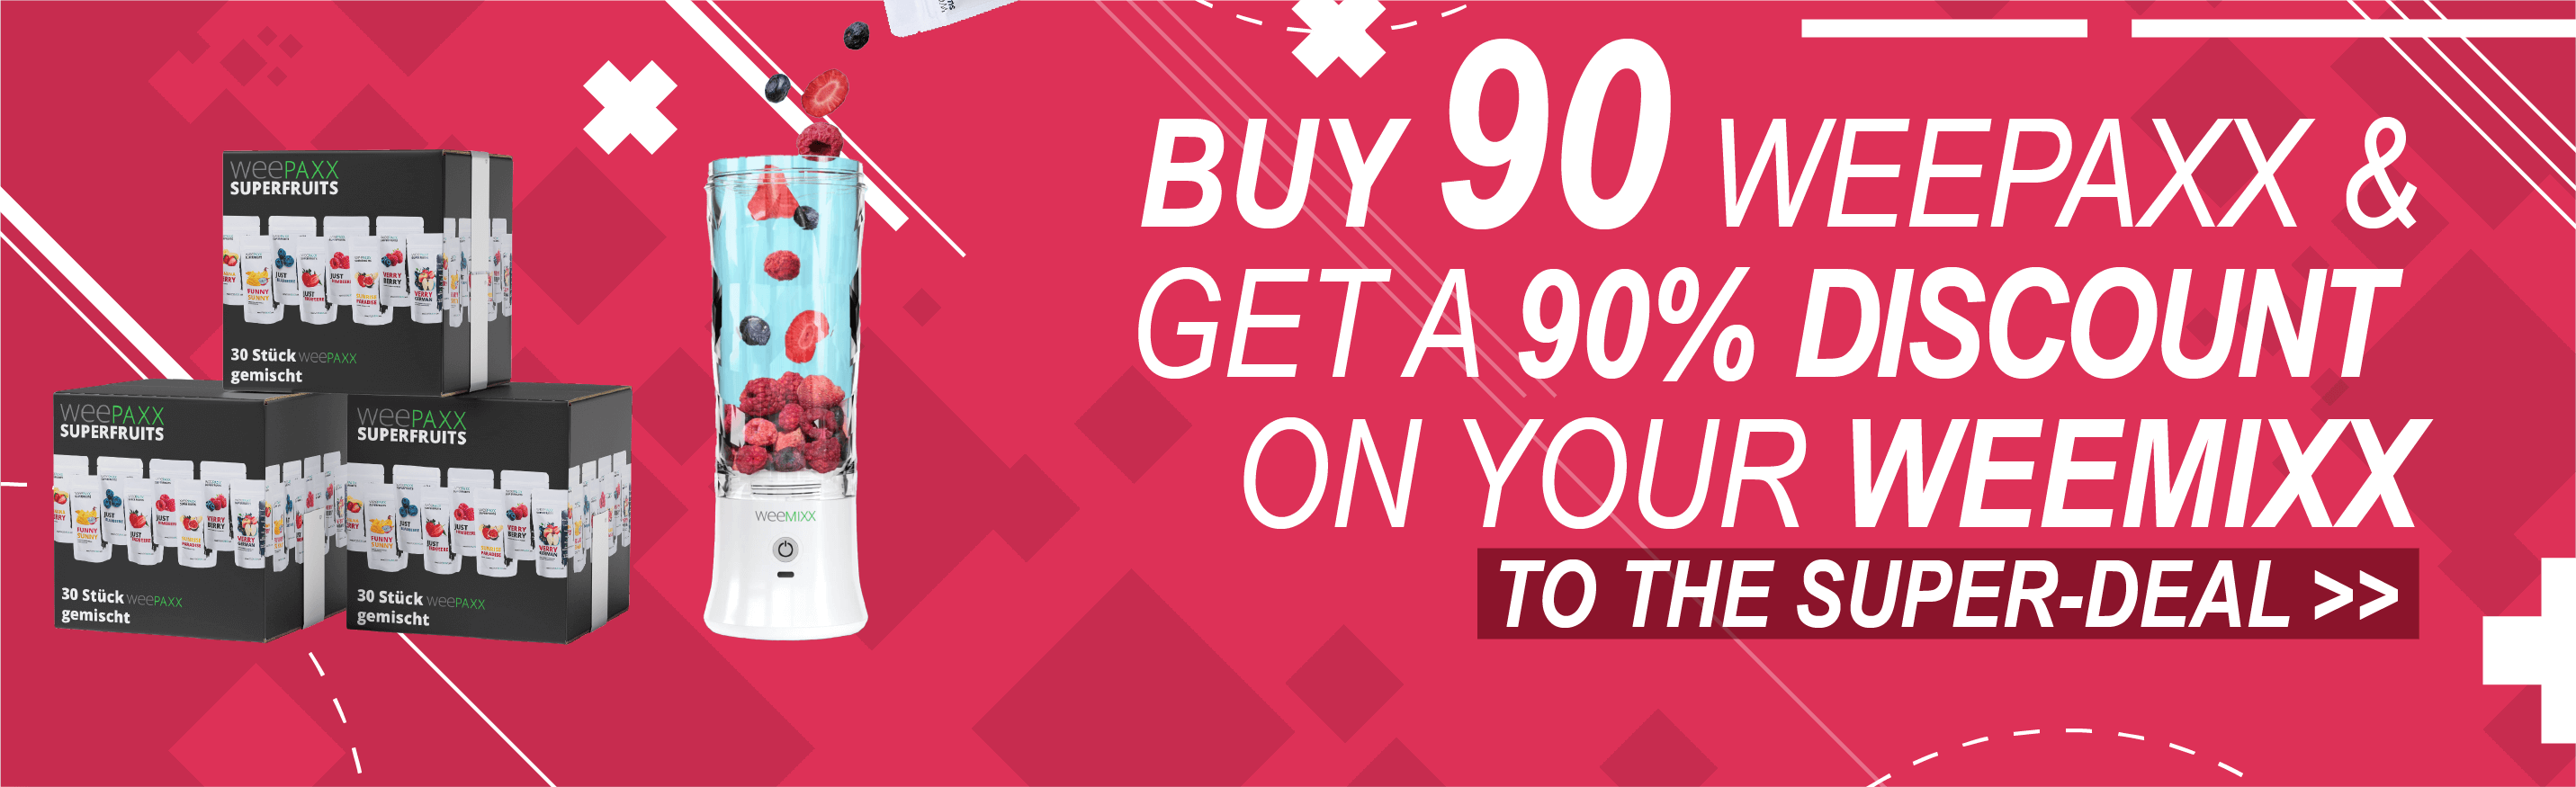 Save 90% on your weemixx